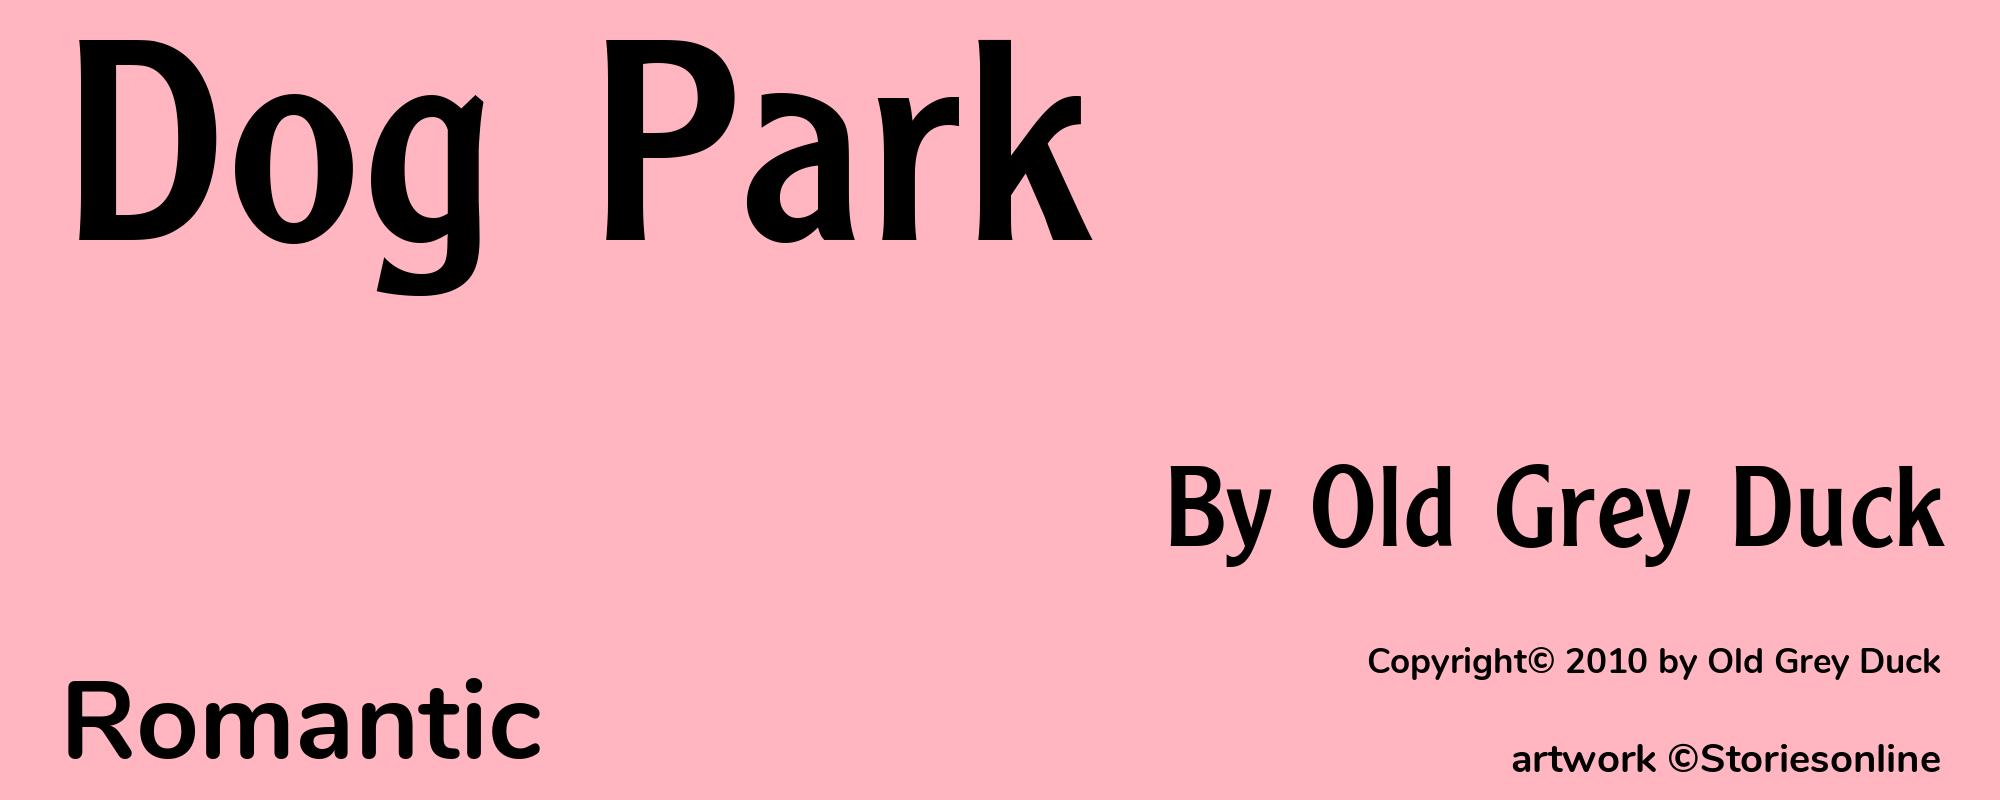 Dog Park - Cover